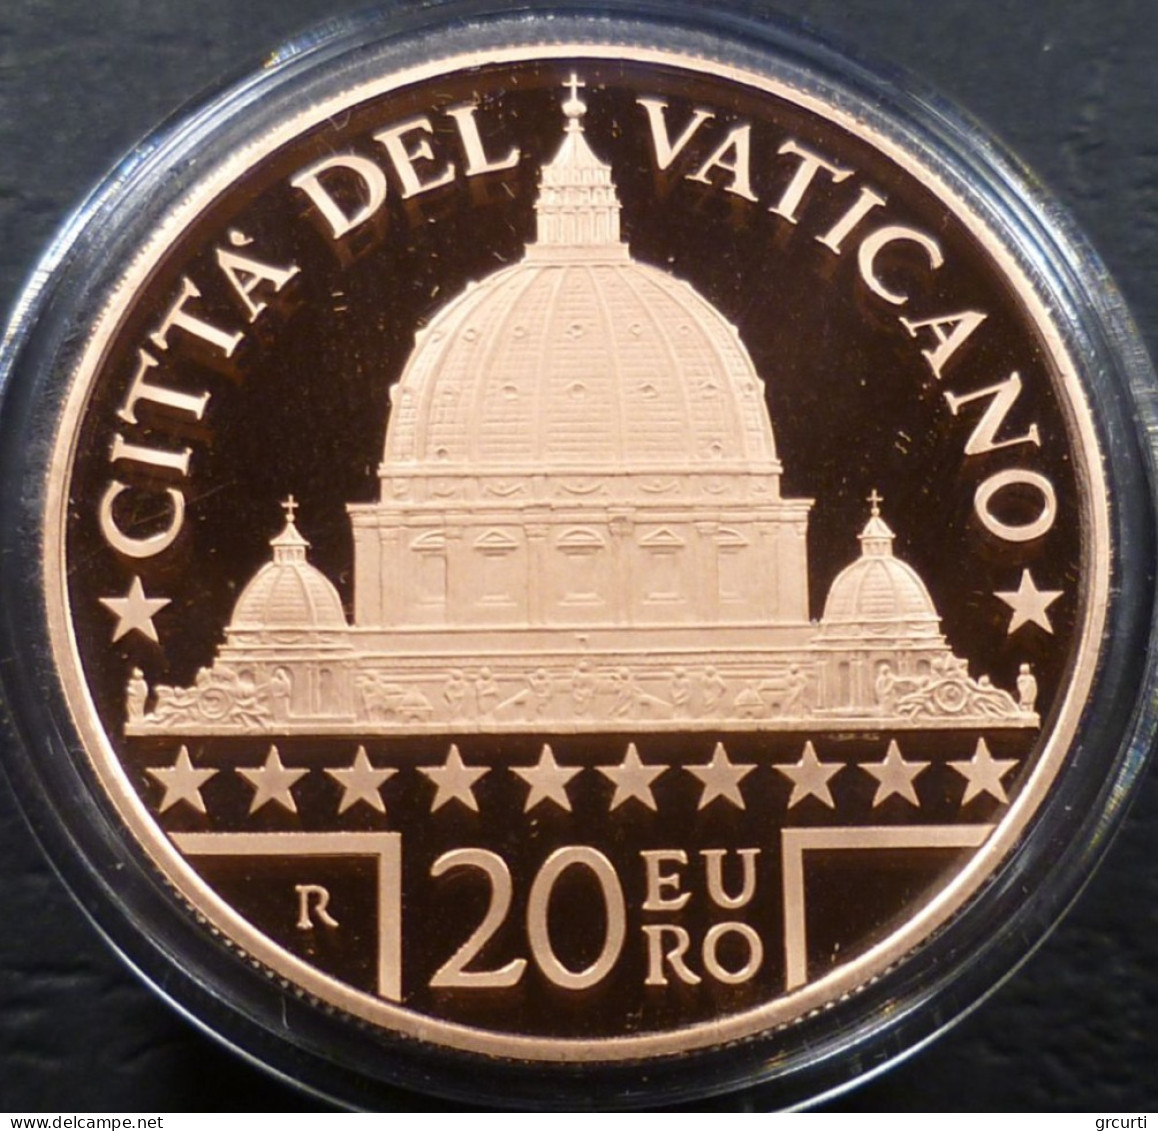 Vaticano - 20 Euro 2022 - Arte E Fede: Cupola Di San Pietro - UC# 283 - Vaticaanstad